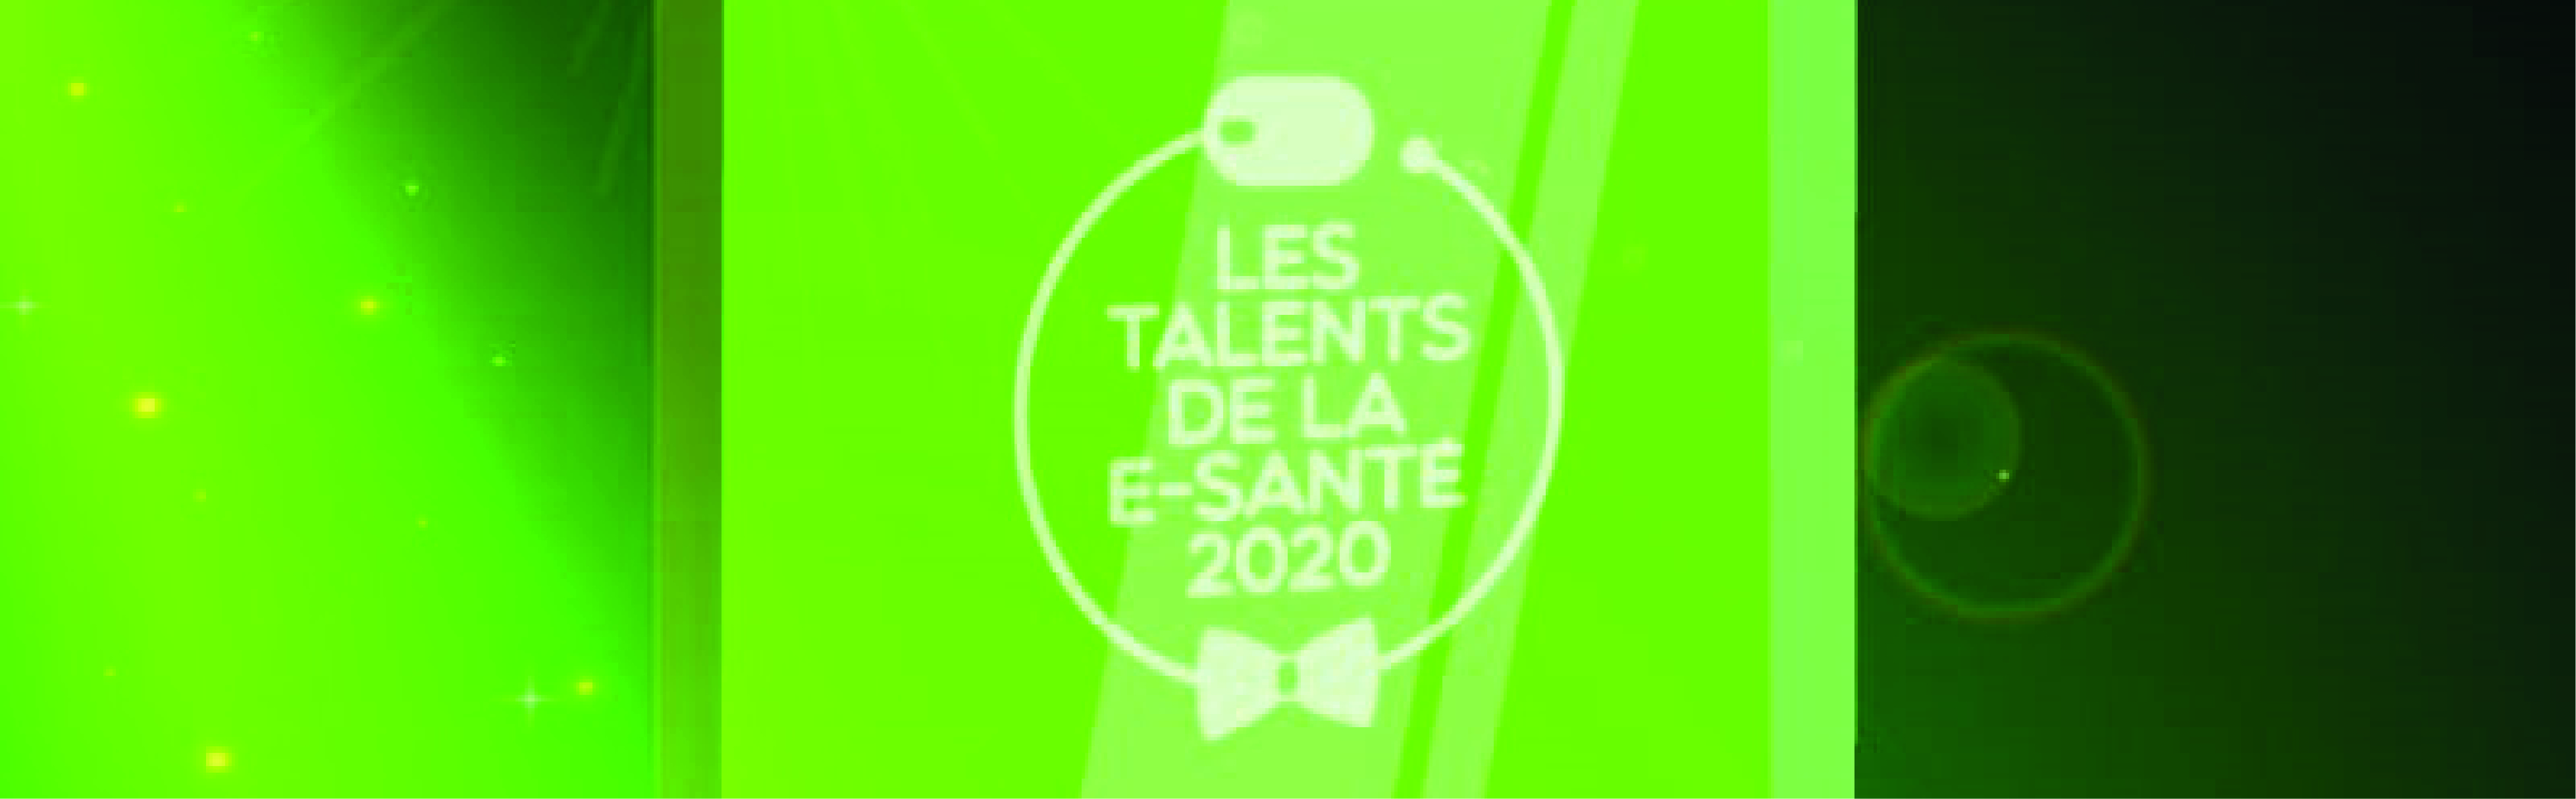 Bandeau_talents_coordination.jpg 